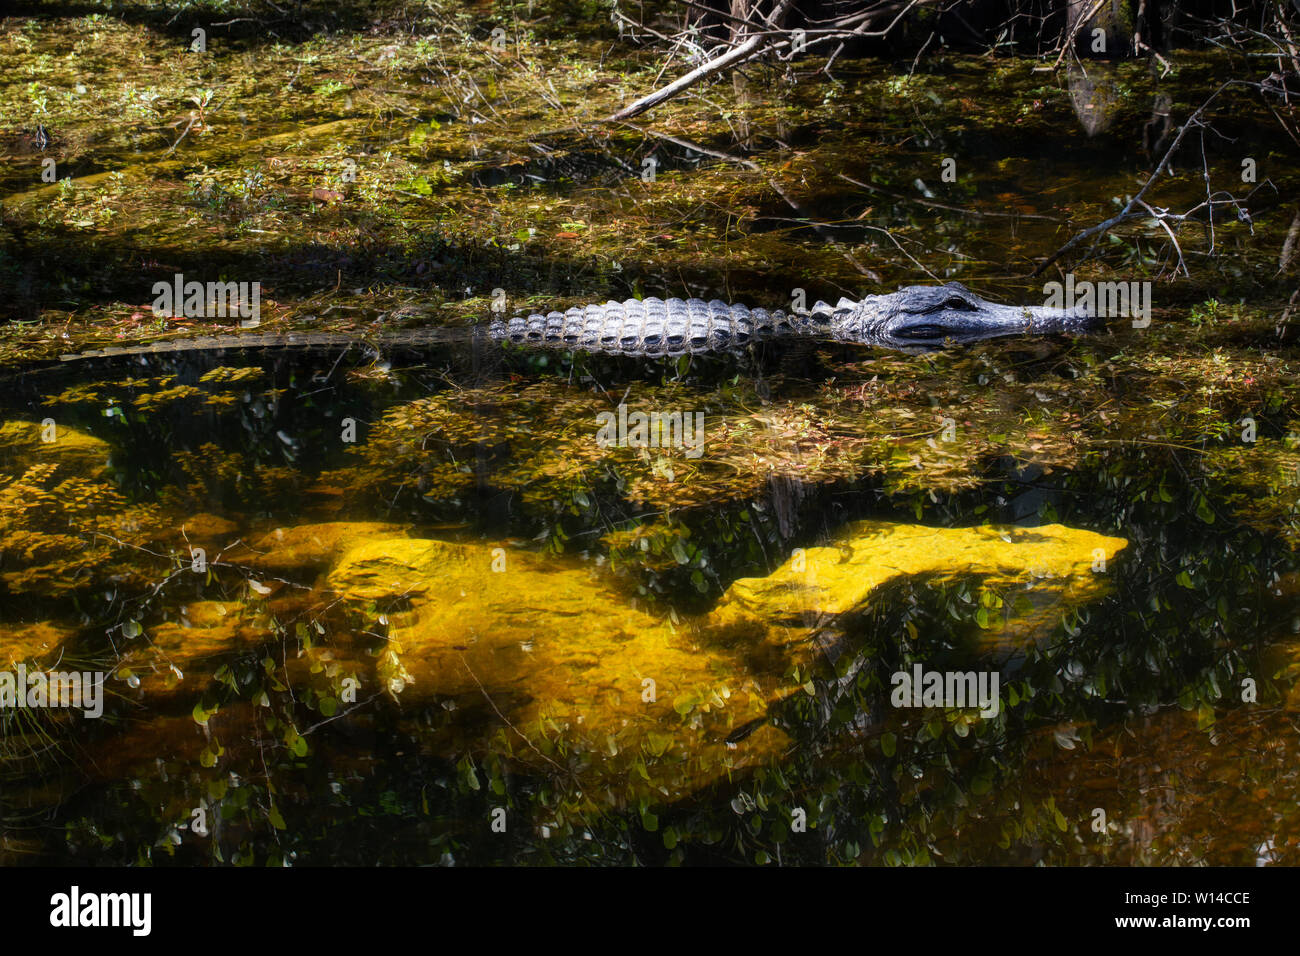 American Alligator,Alligator mississippiensis, glides above clear water showing rocks beneath at Big Cypress Swamp, Florida Stock Photo